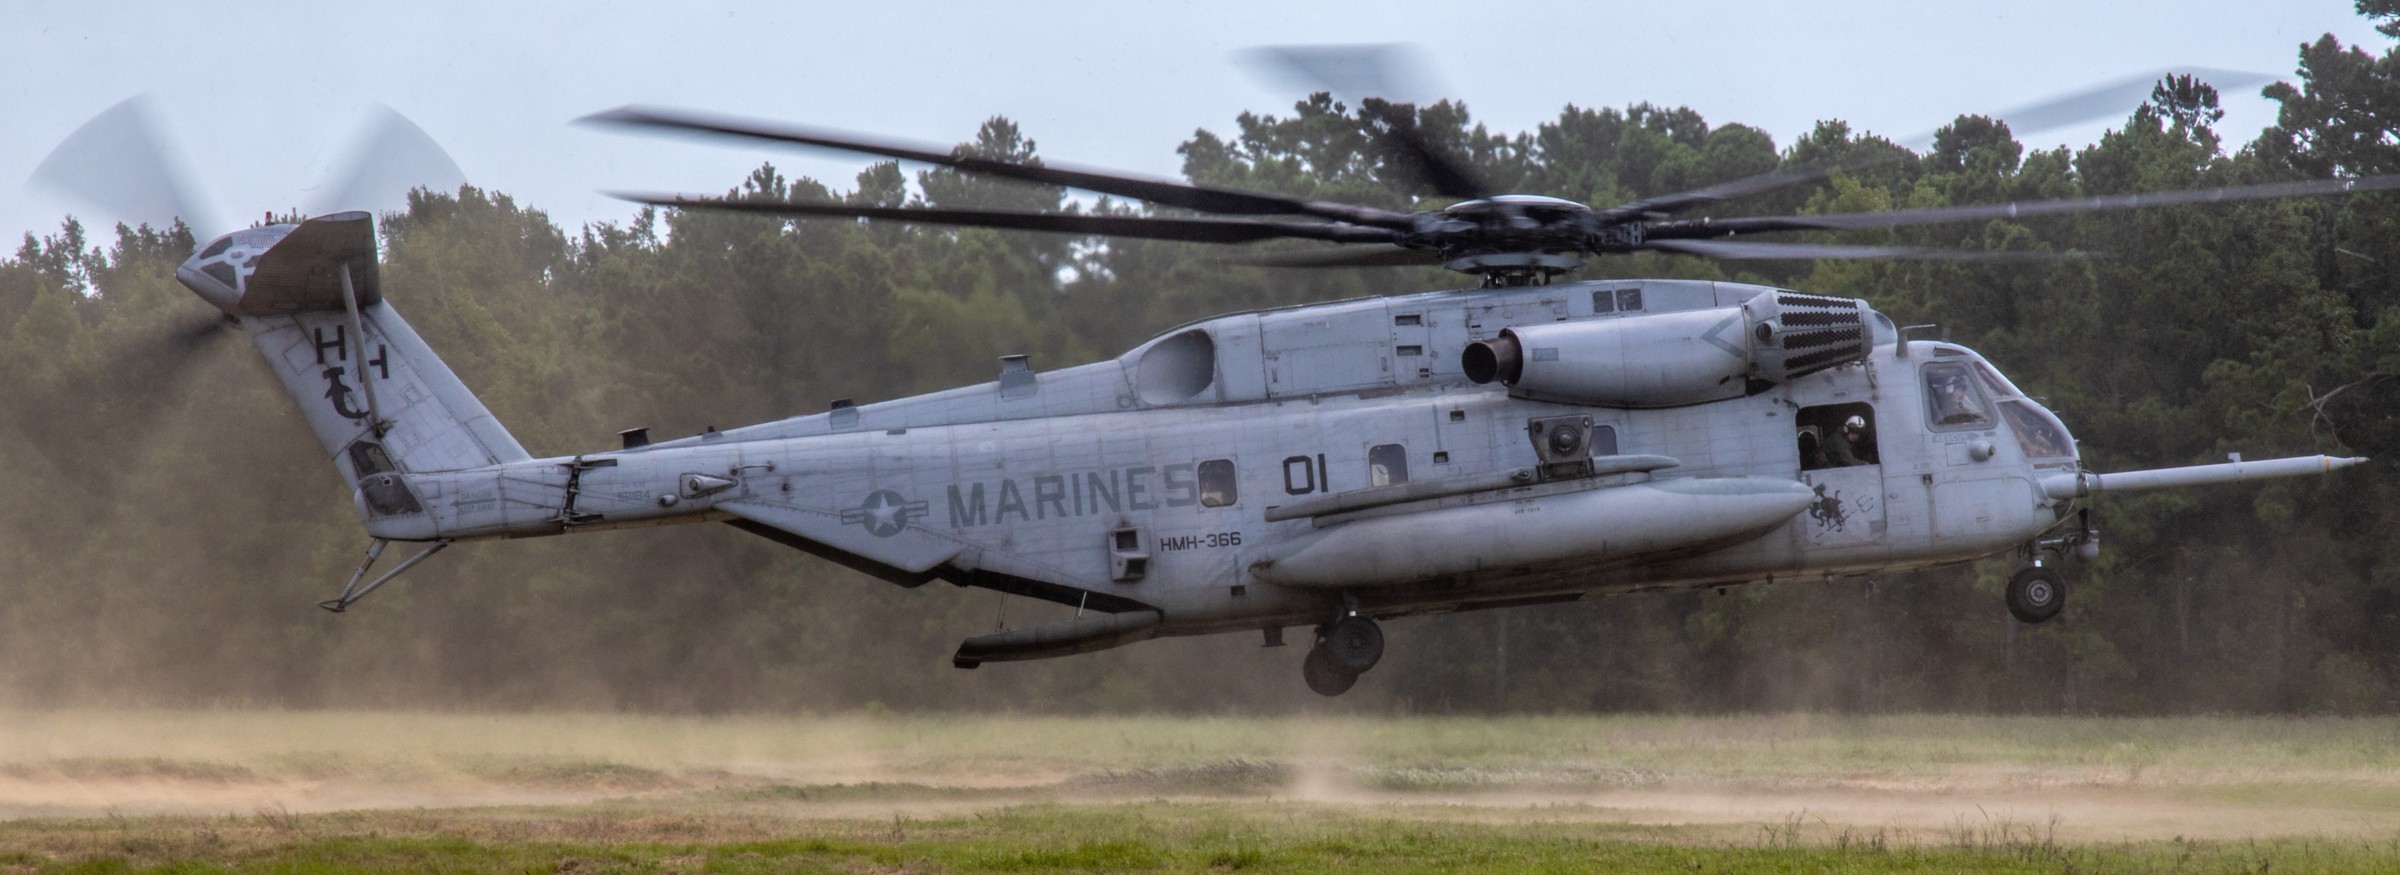 hmh-366 hammerheads ch-53e super stallion marine heavy helicopter squadron usmc 169